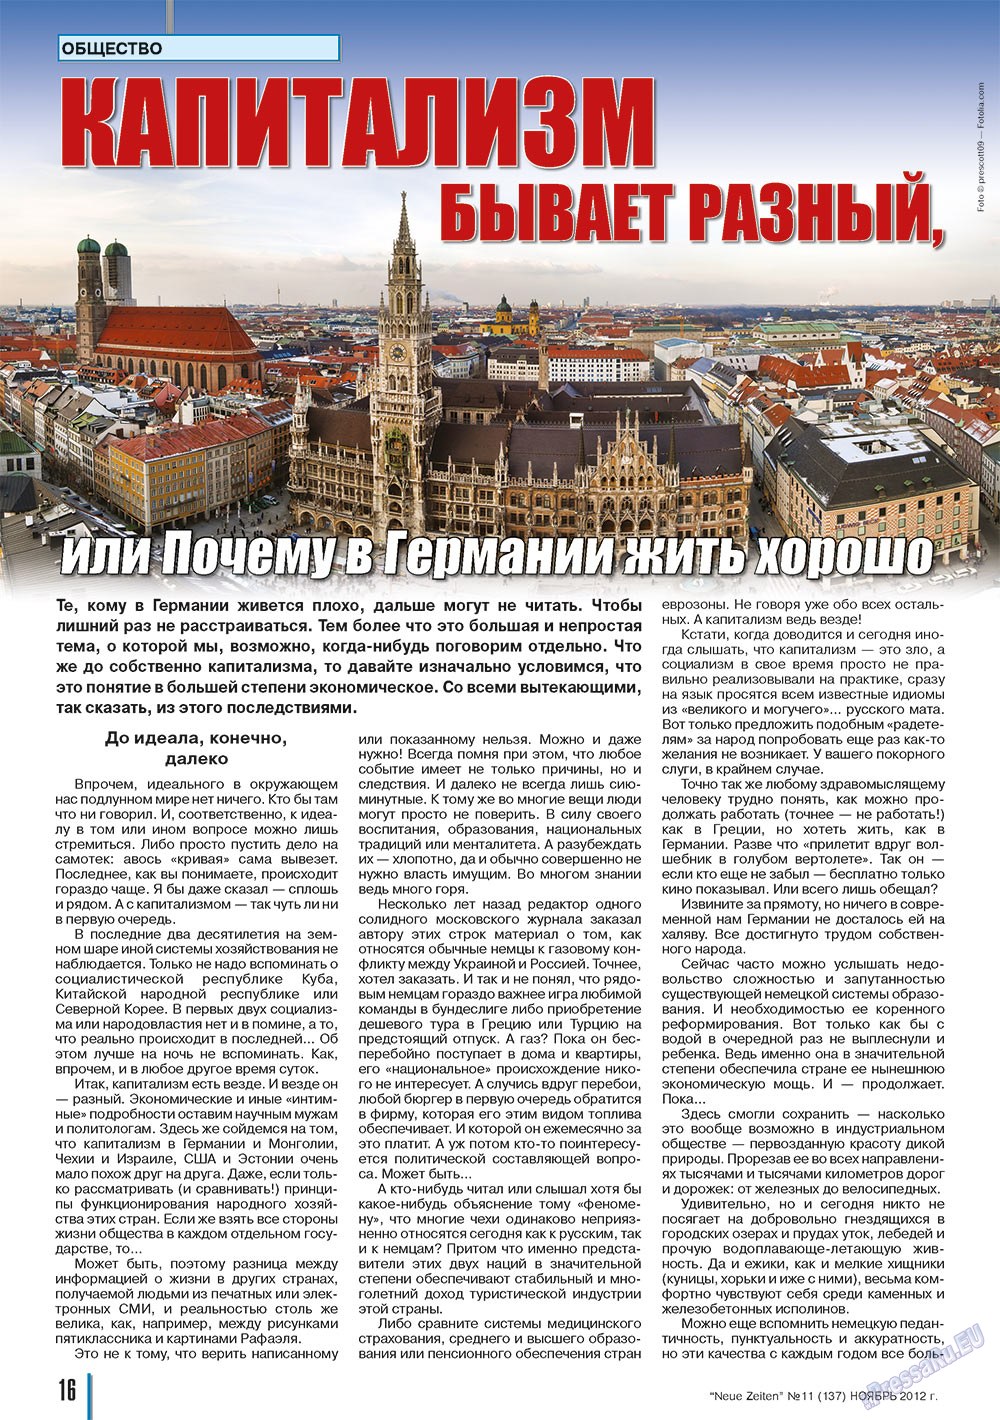 Neue Zeiten (журнал). 2012 год, номер 11, стр. 16